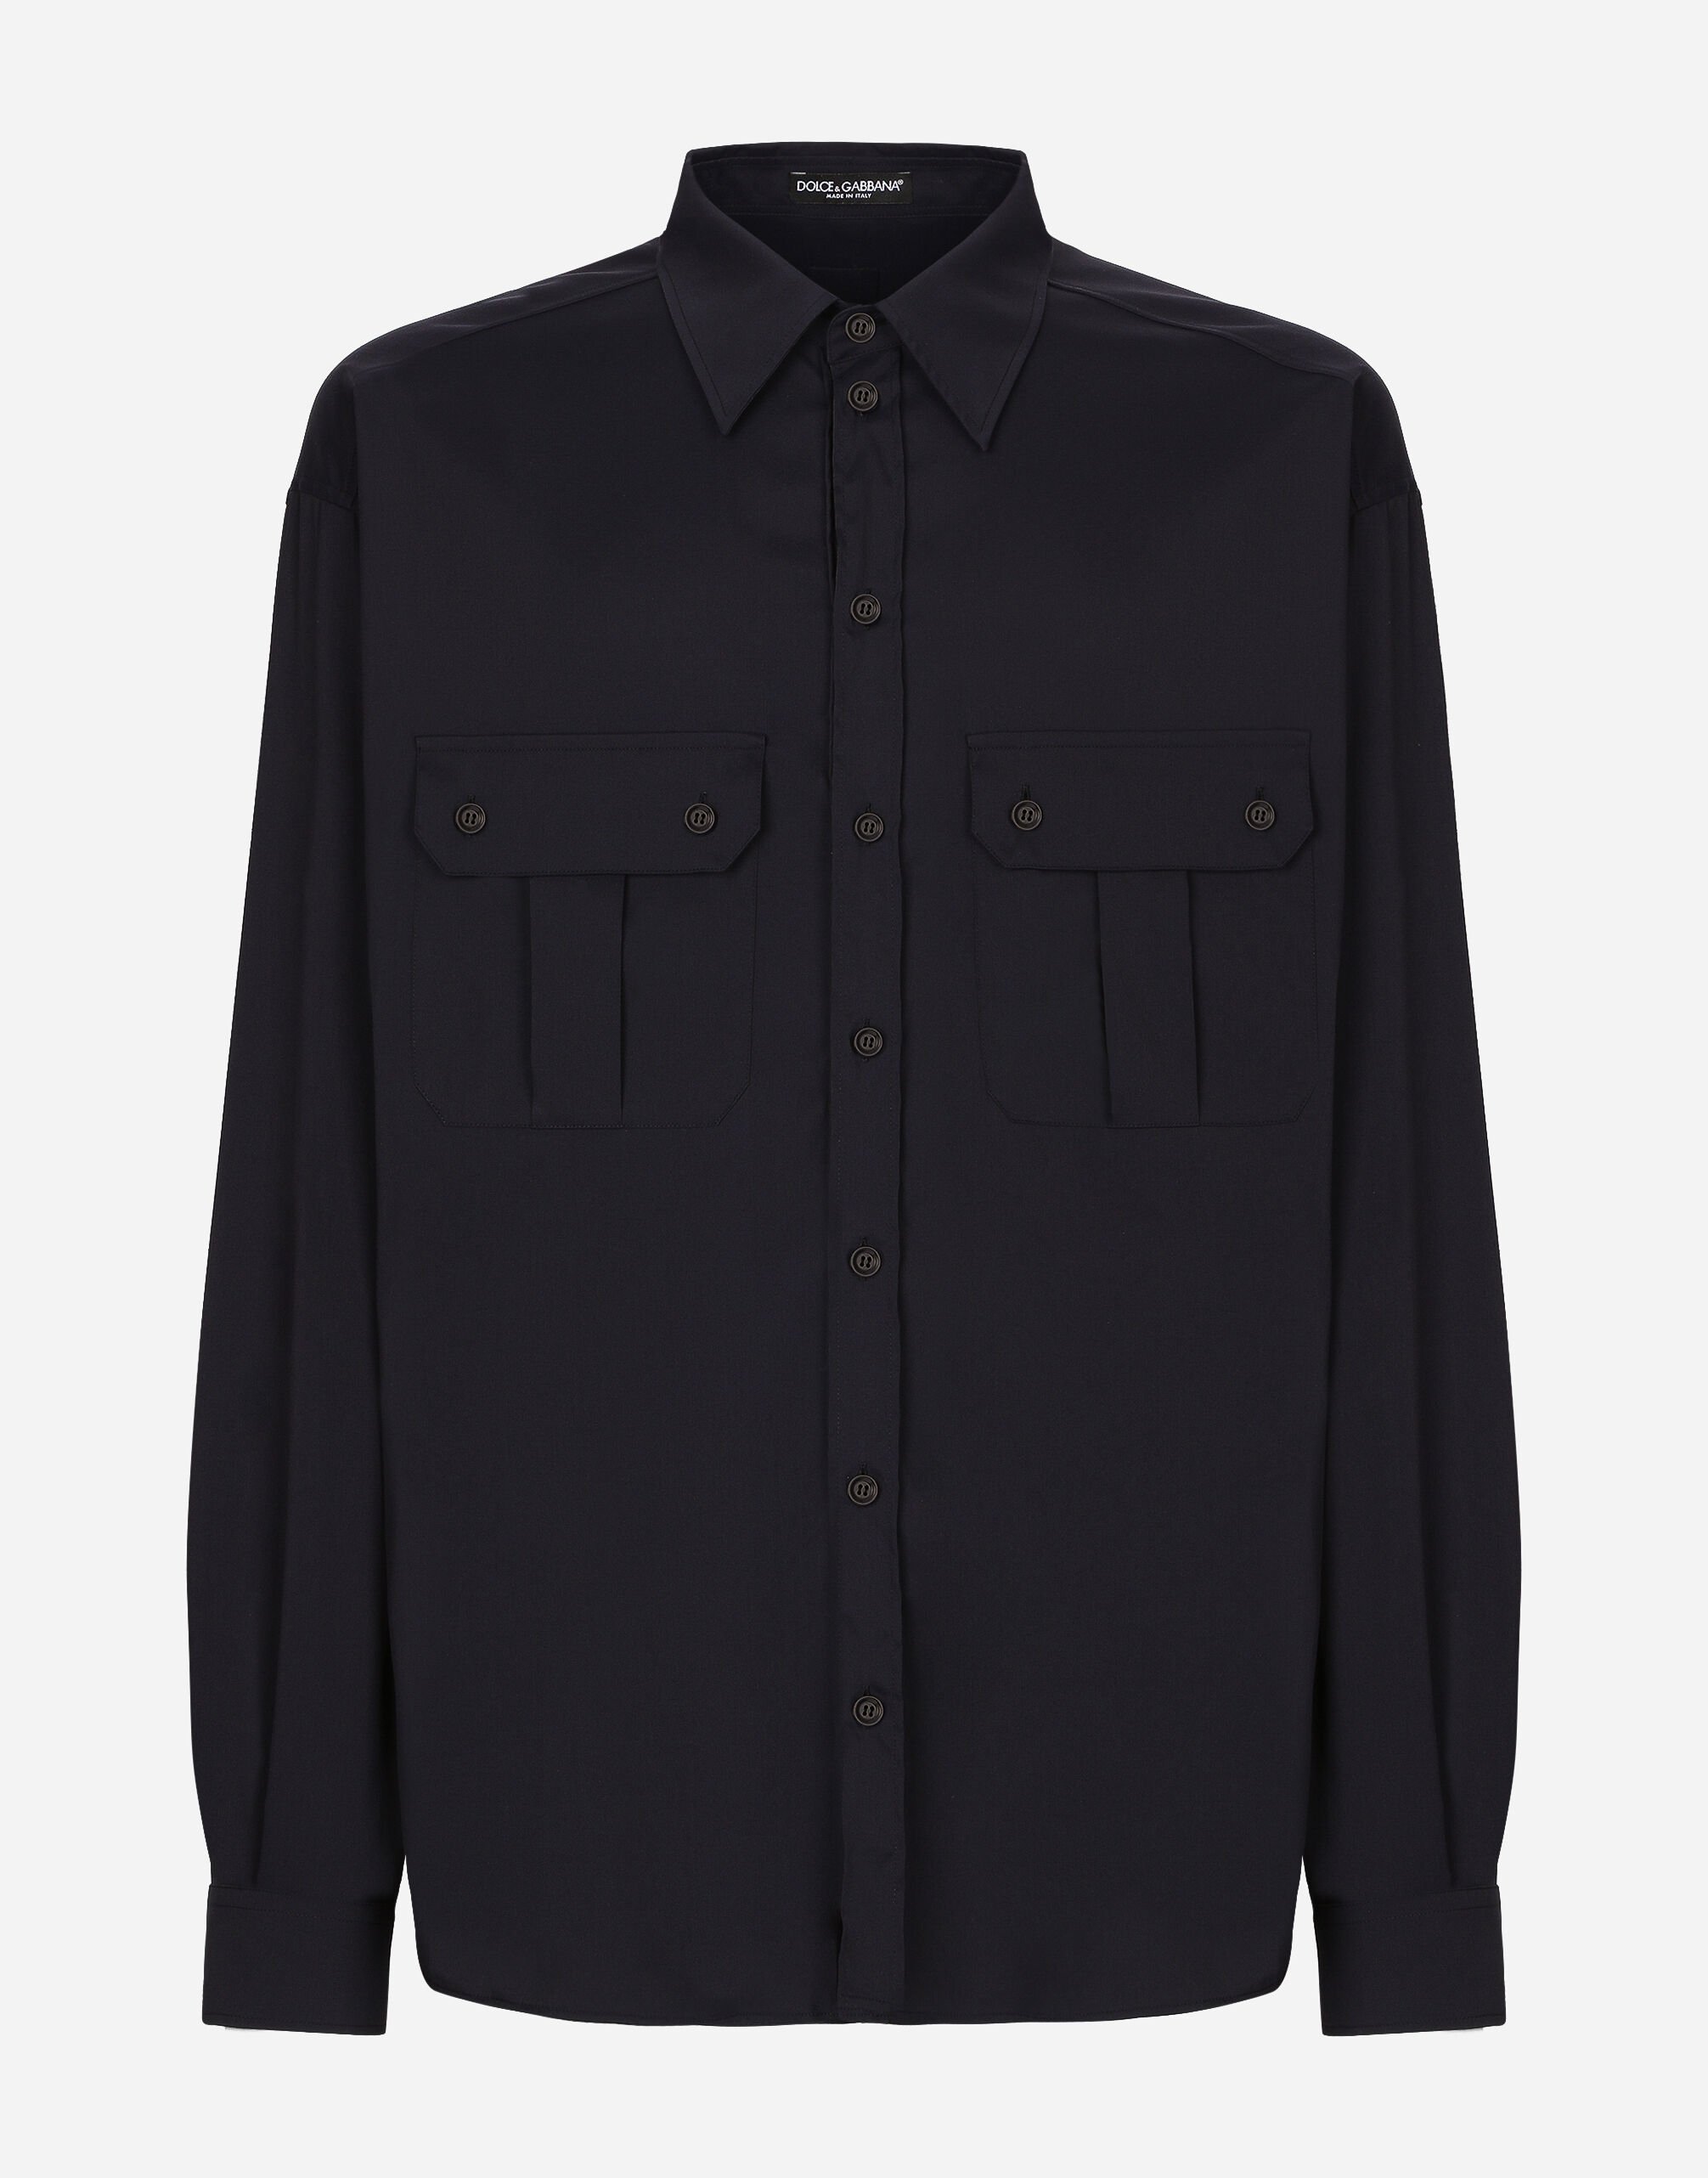 Dolce & Gabbana Technical fabric shirt with pockets Blue GY6IETFI5IY